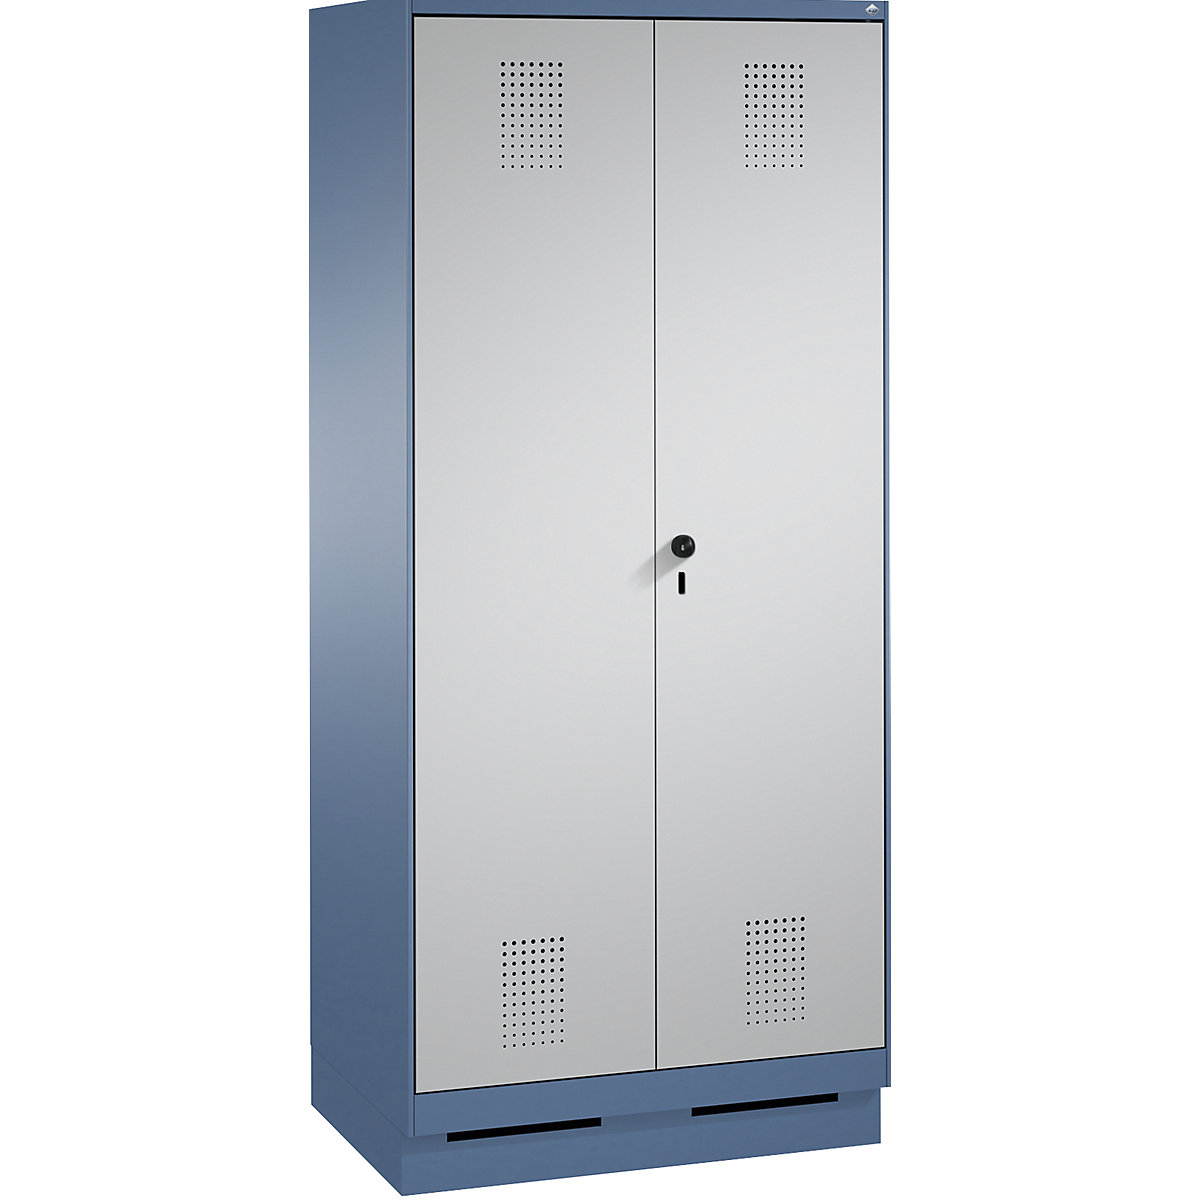 Garderobna omara EVOLO, dvokrilna vrata – C+P, 2 razdelka, širina razdelka 400 mm, s podnožjem, modra / bela aluminijasta-11